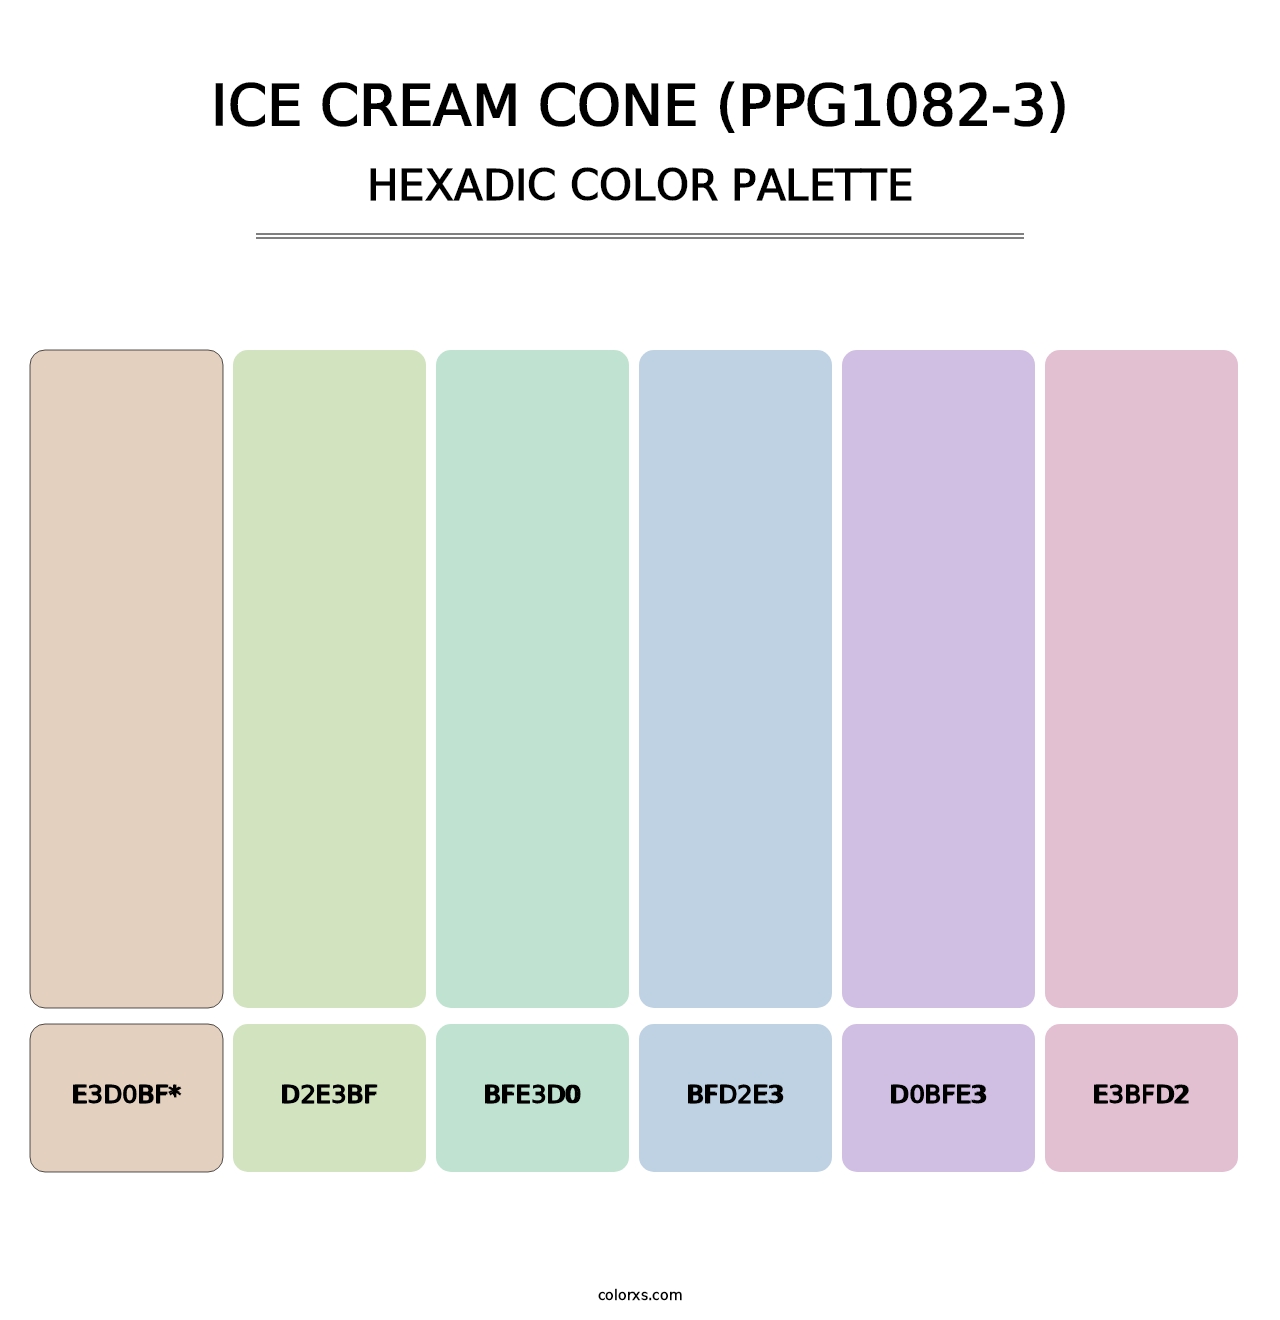 Ice Cream Cone (PPG1082-3) - Hexadic Color Palette